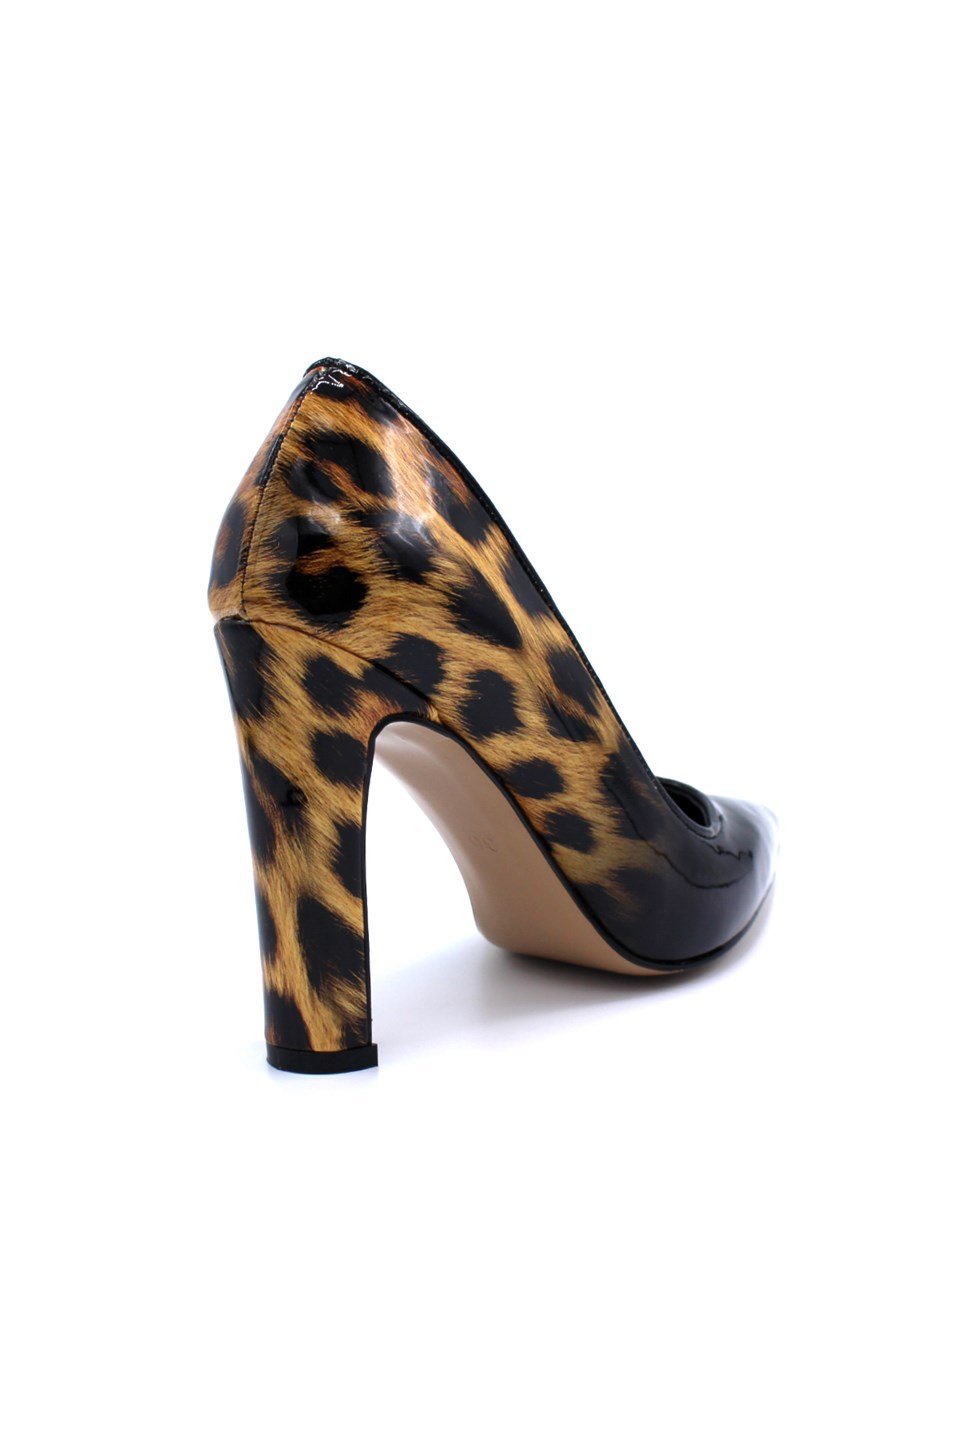 Bestello Patterned Thick Heel Black-Leopard 281-231 Women's Shoes